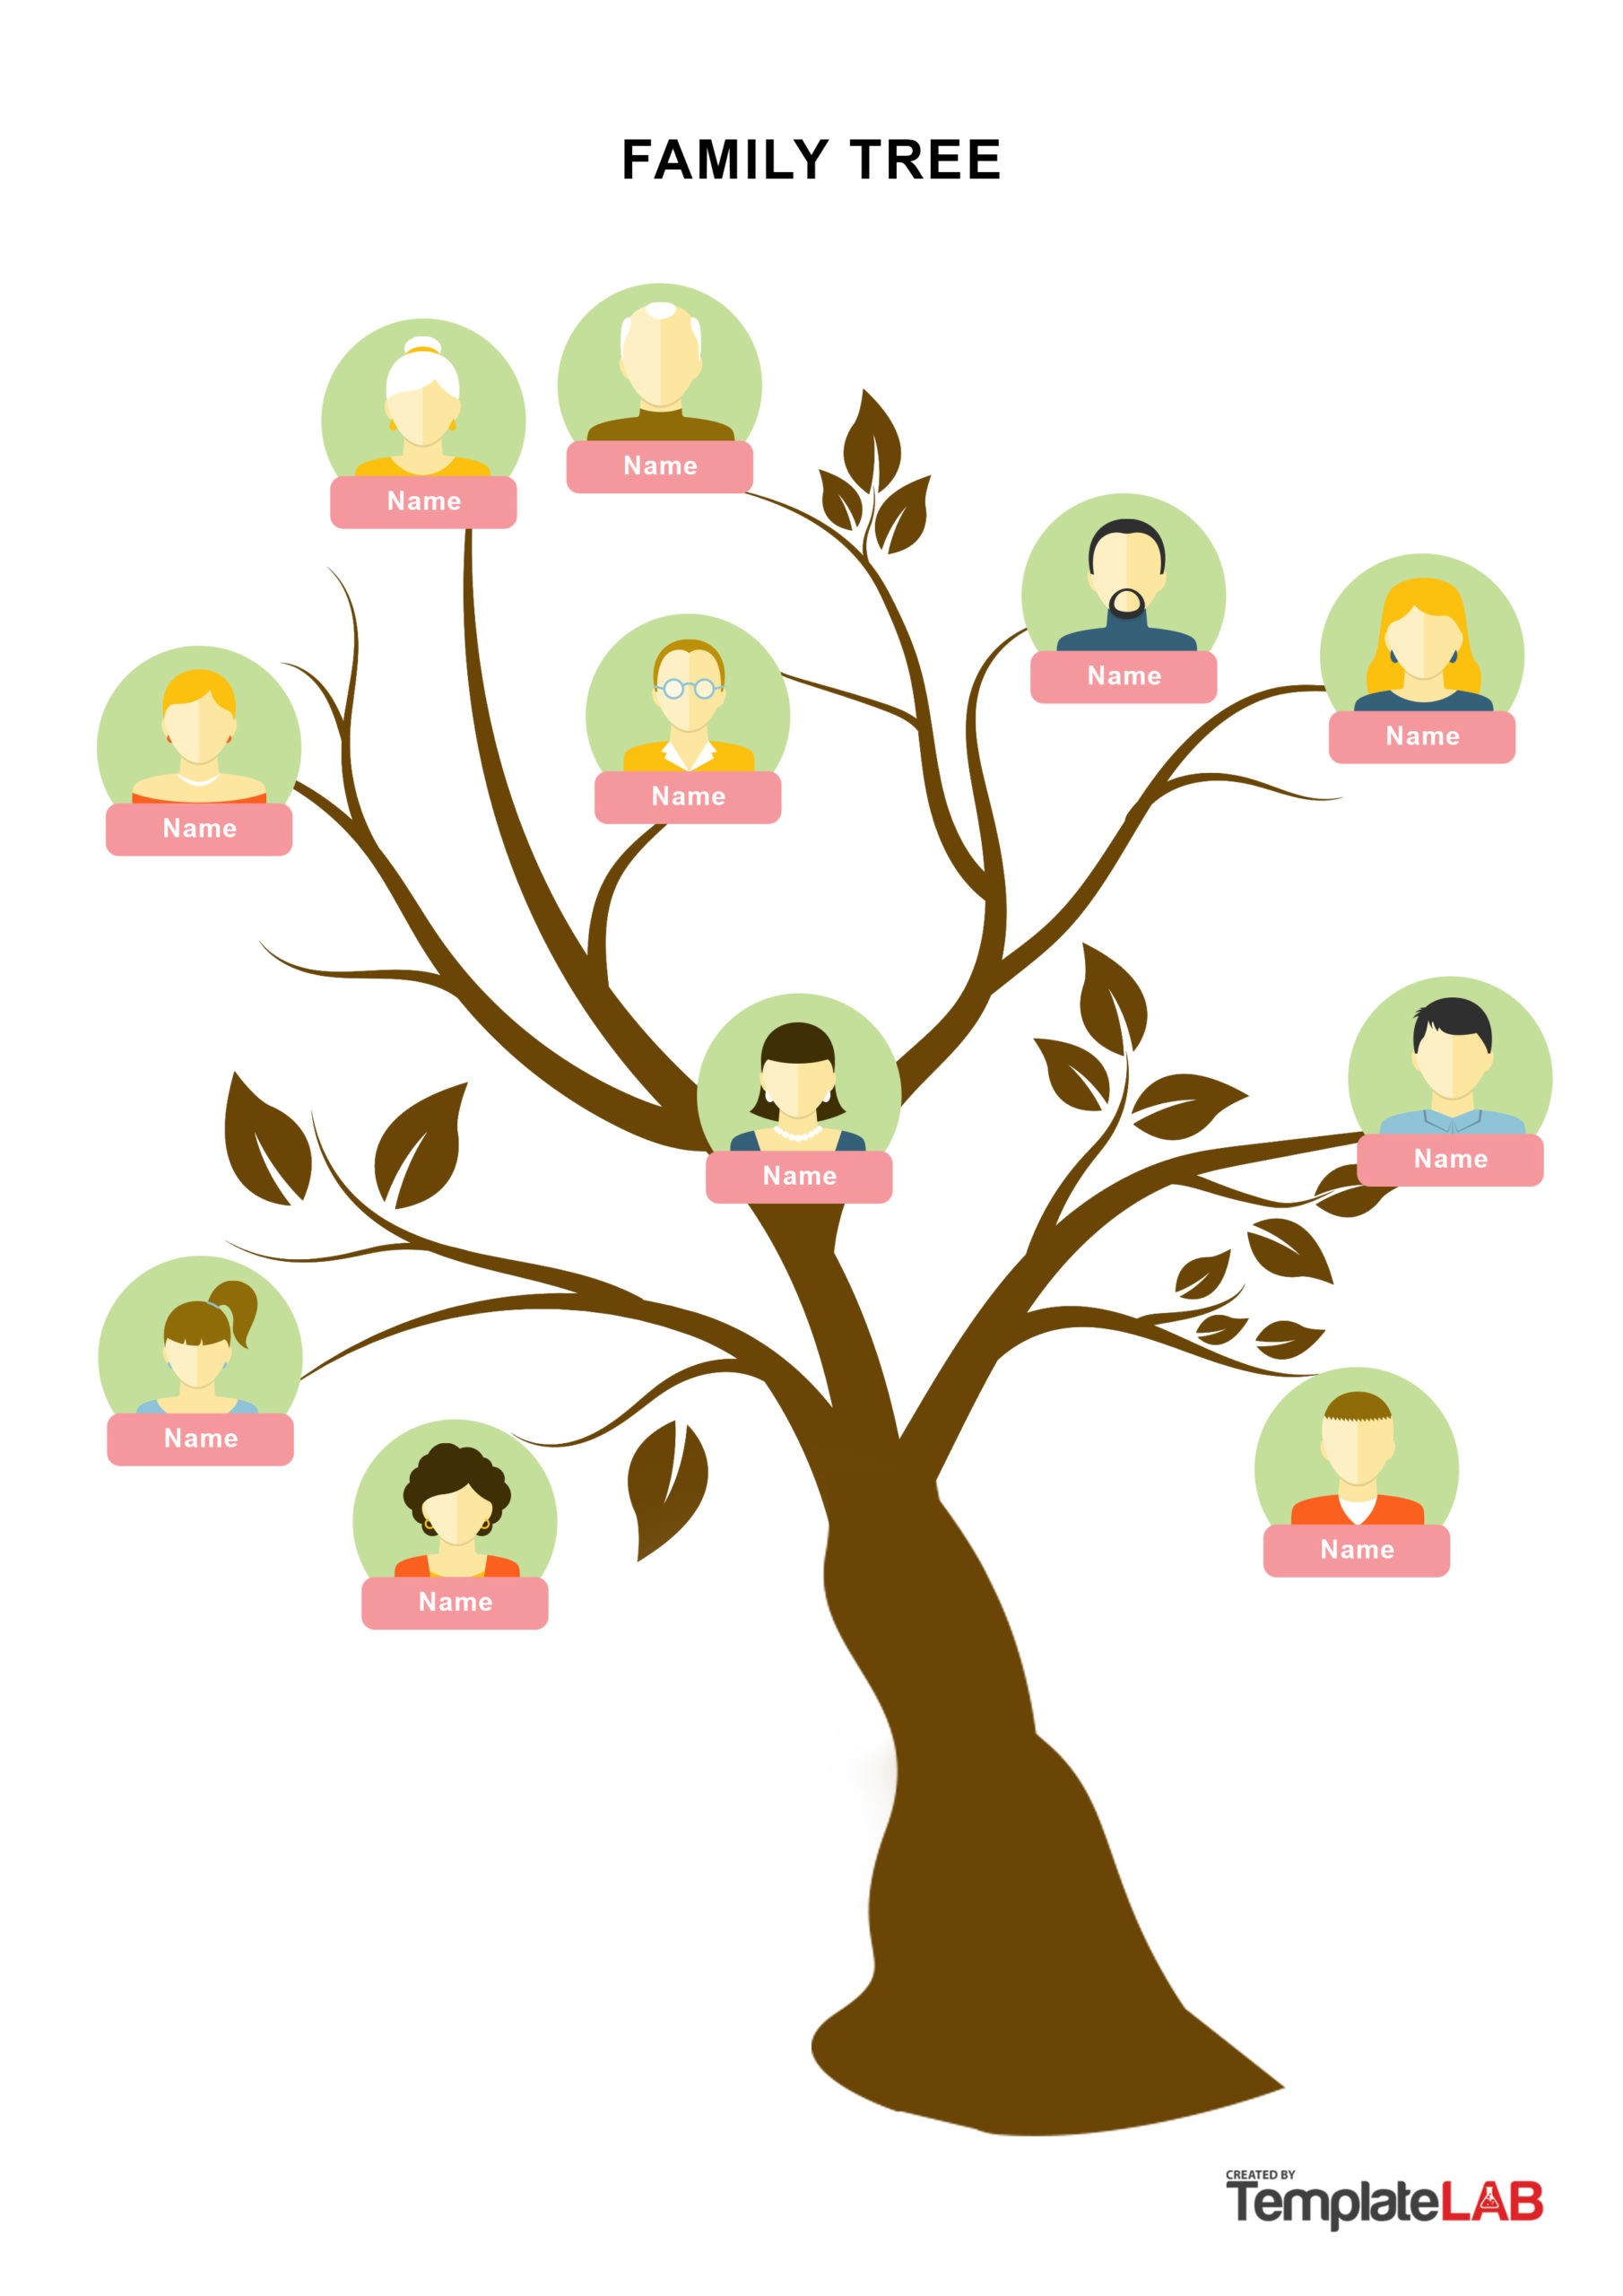 Family Tree Diagrams Templates